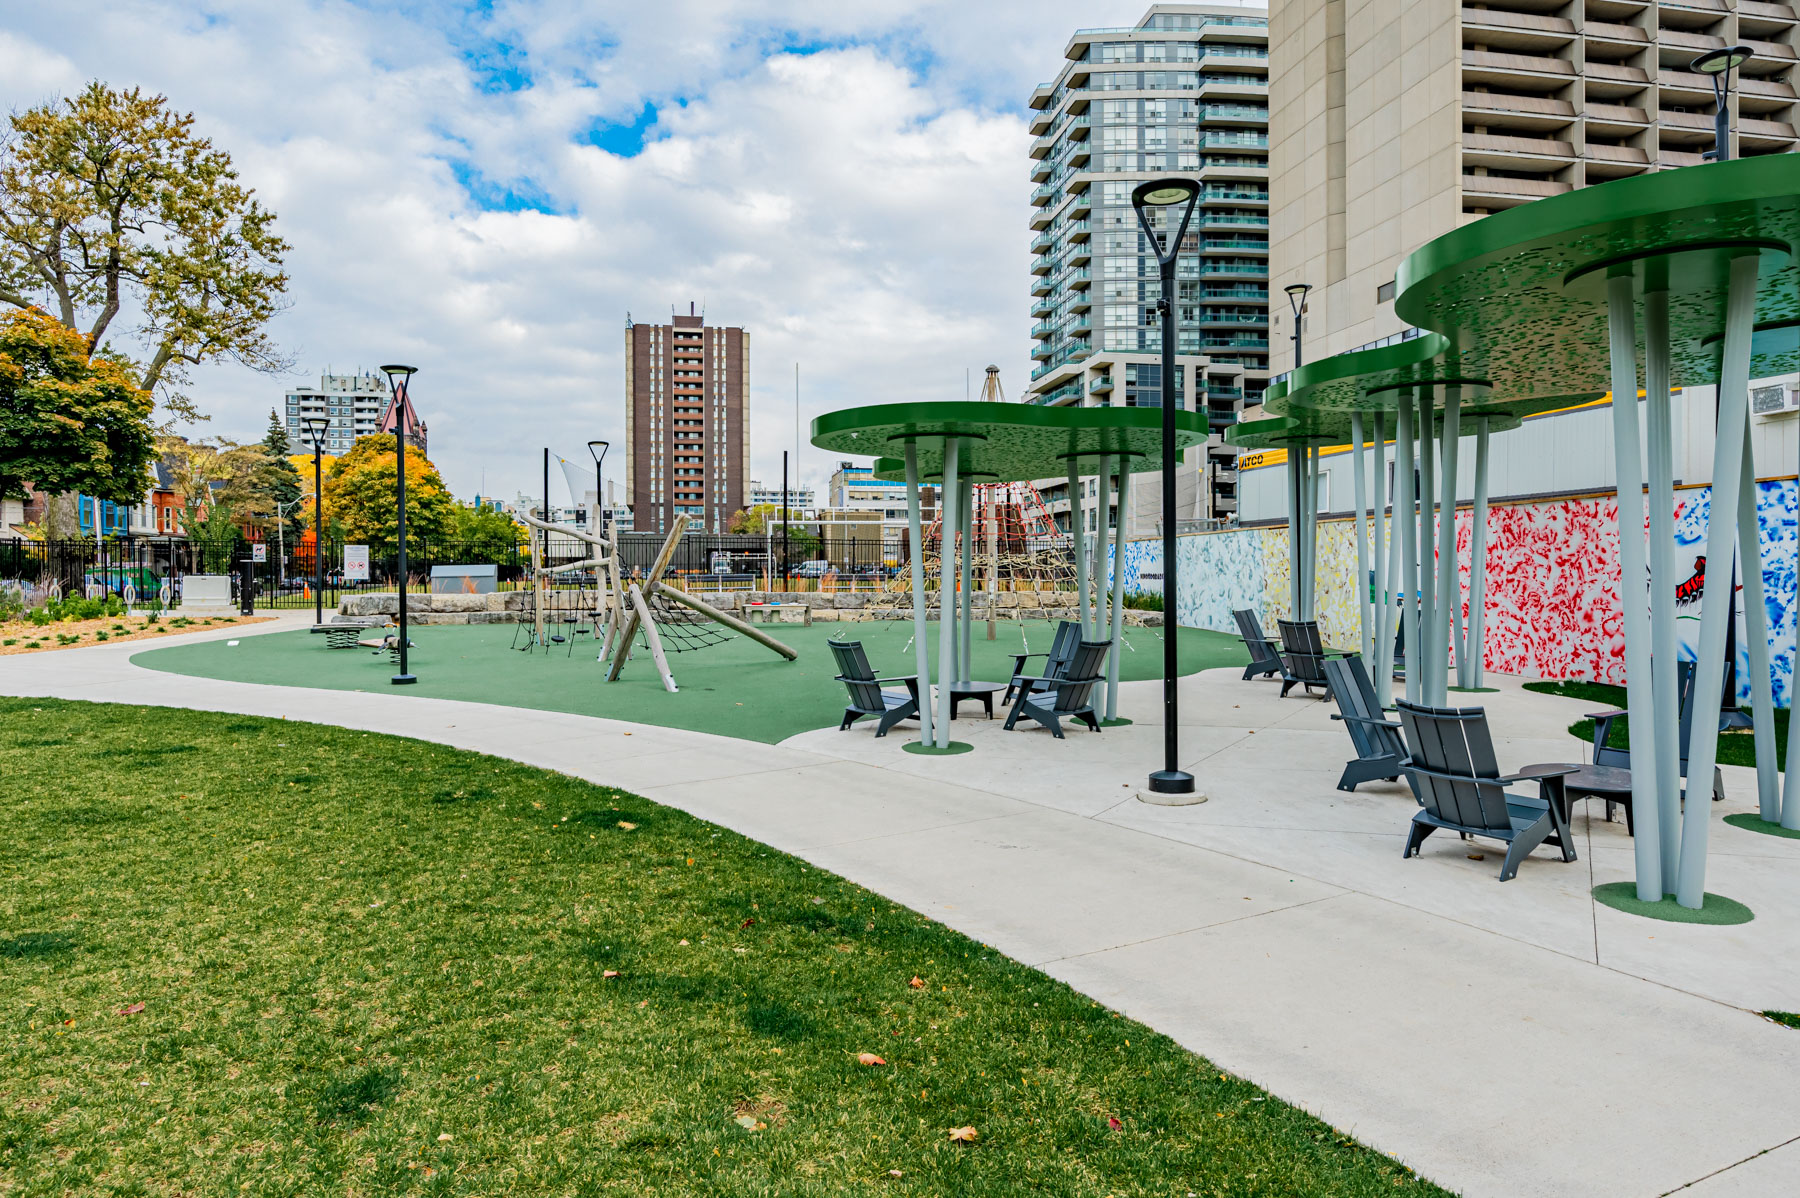 Children's playground equipment and canopy seating – Robert Street Park.